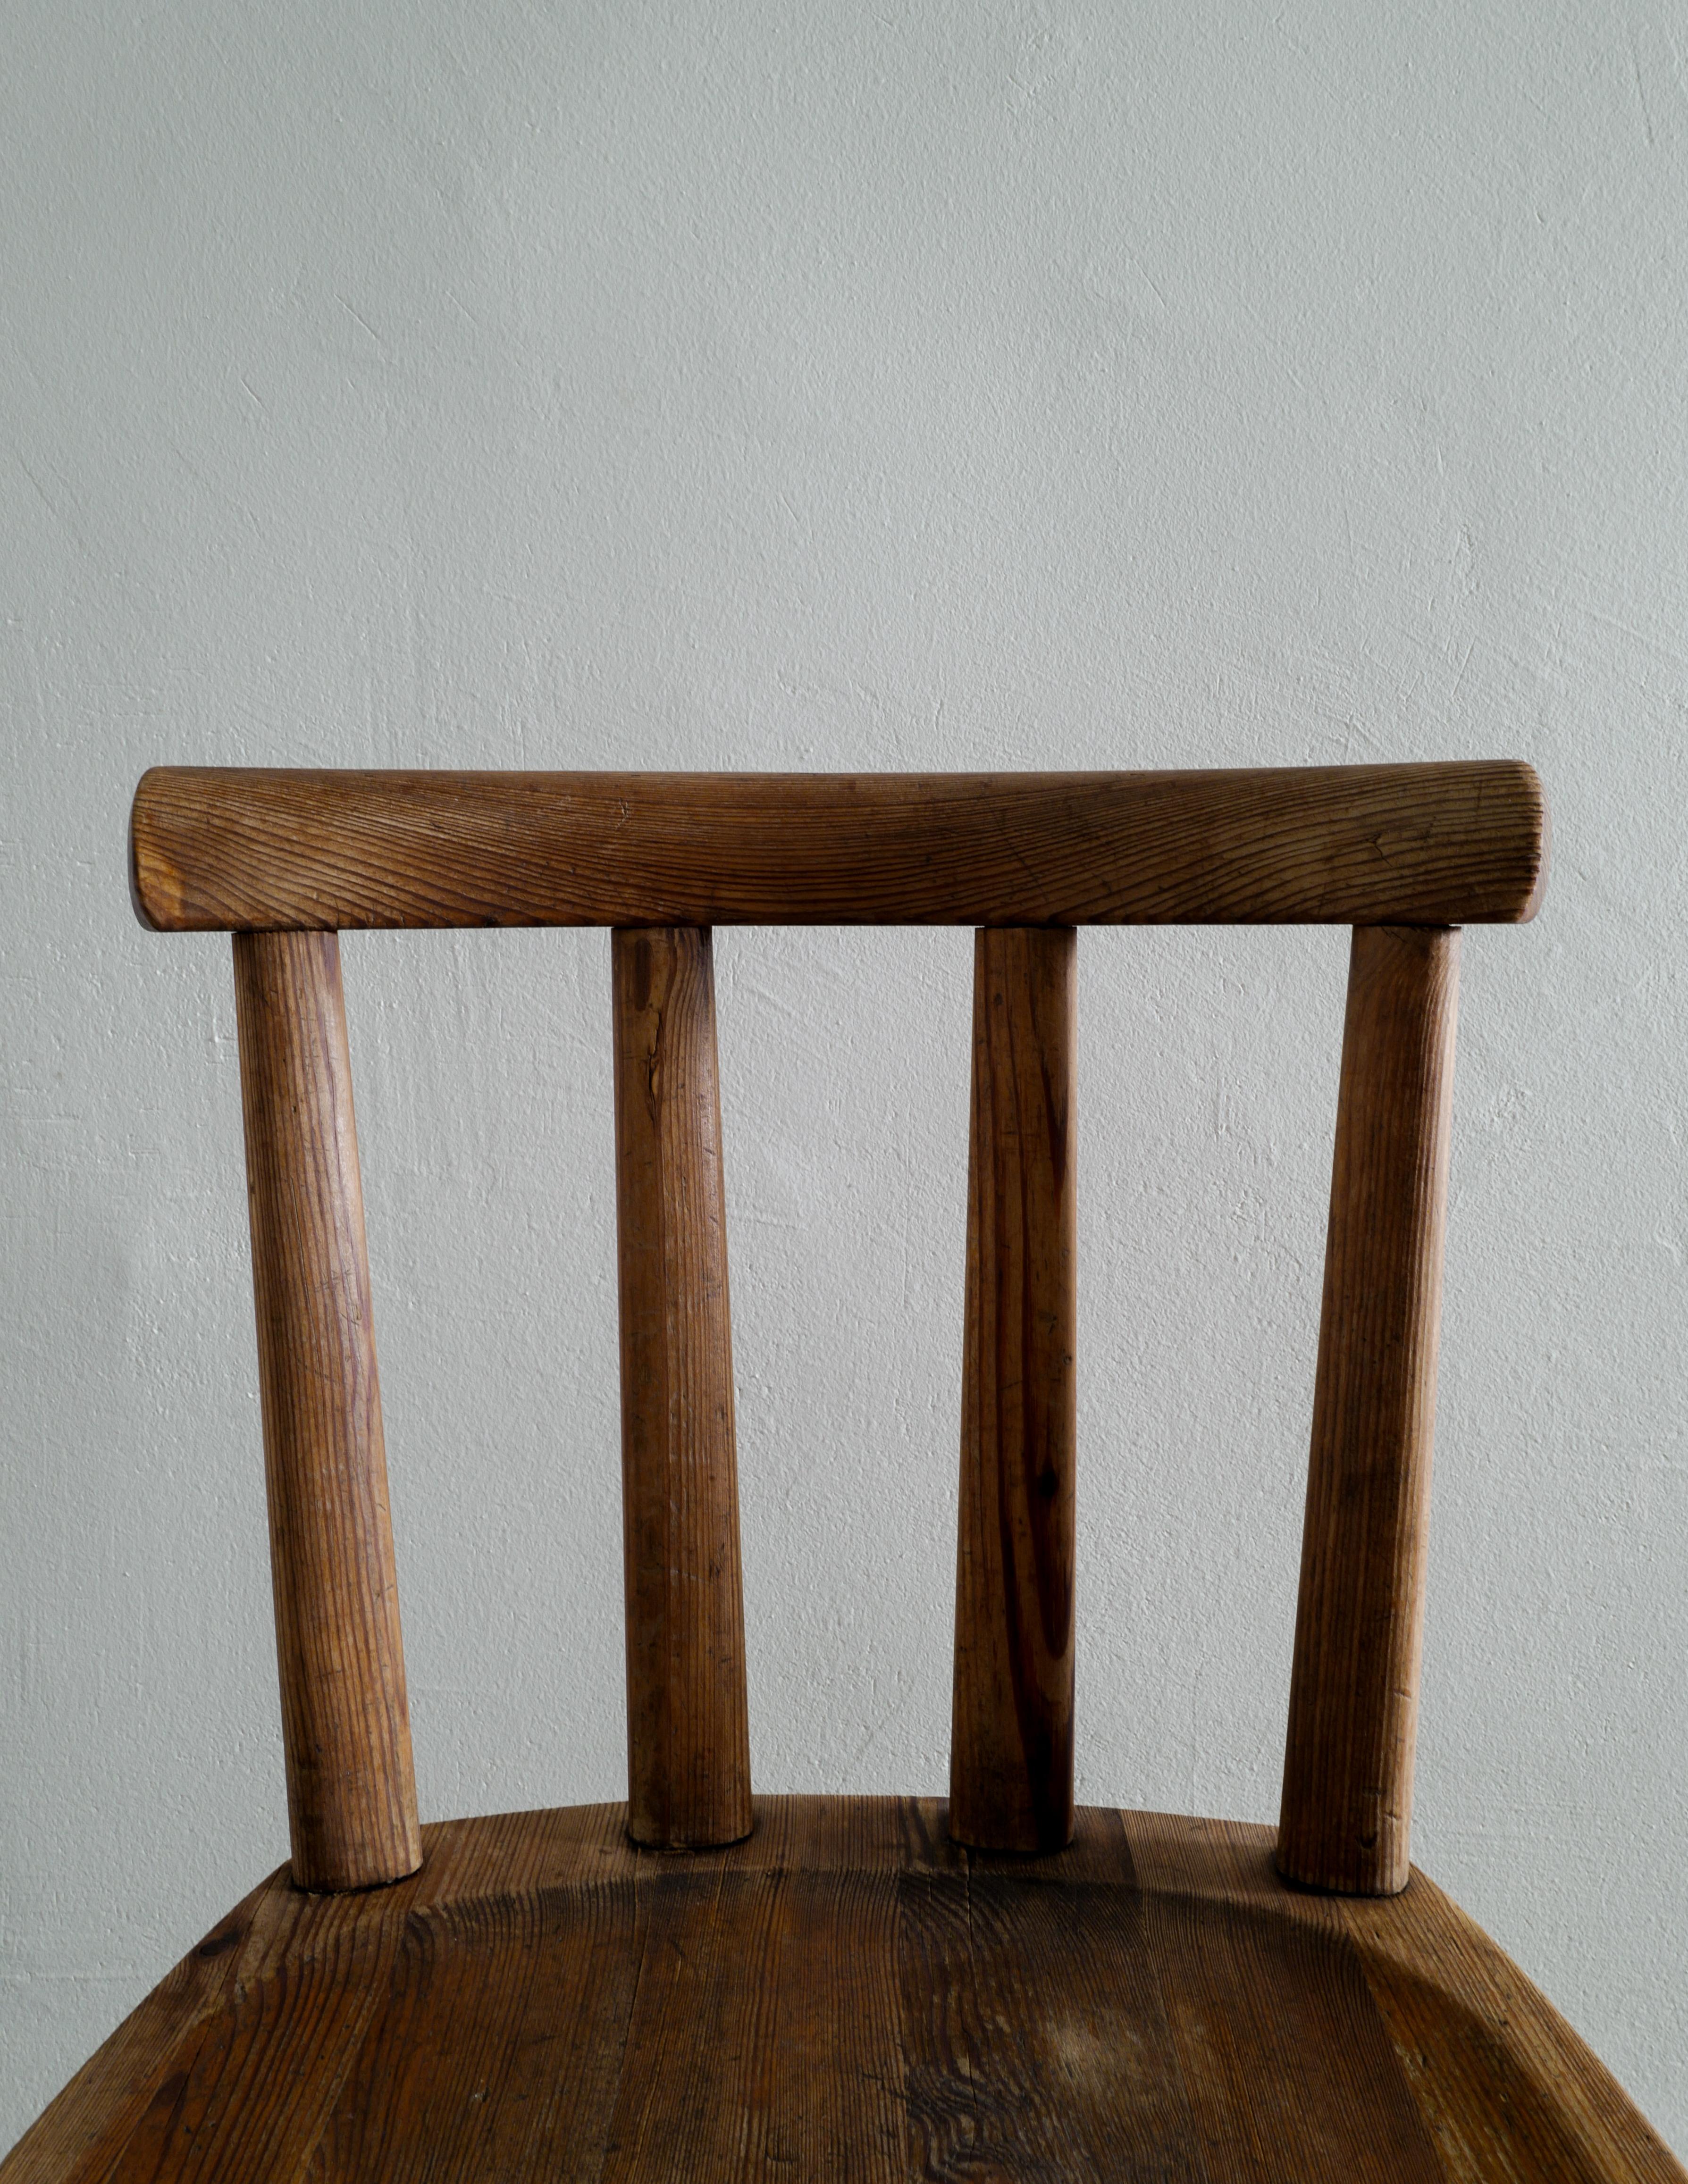 Mid-20th Century Axel Einar Hjorth Table & Chair Produced by Nordiska Kompaniet, Sweden, 1930s